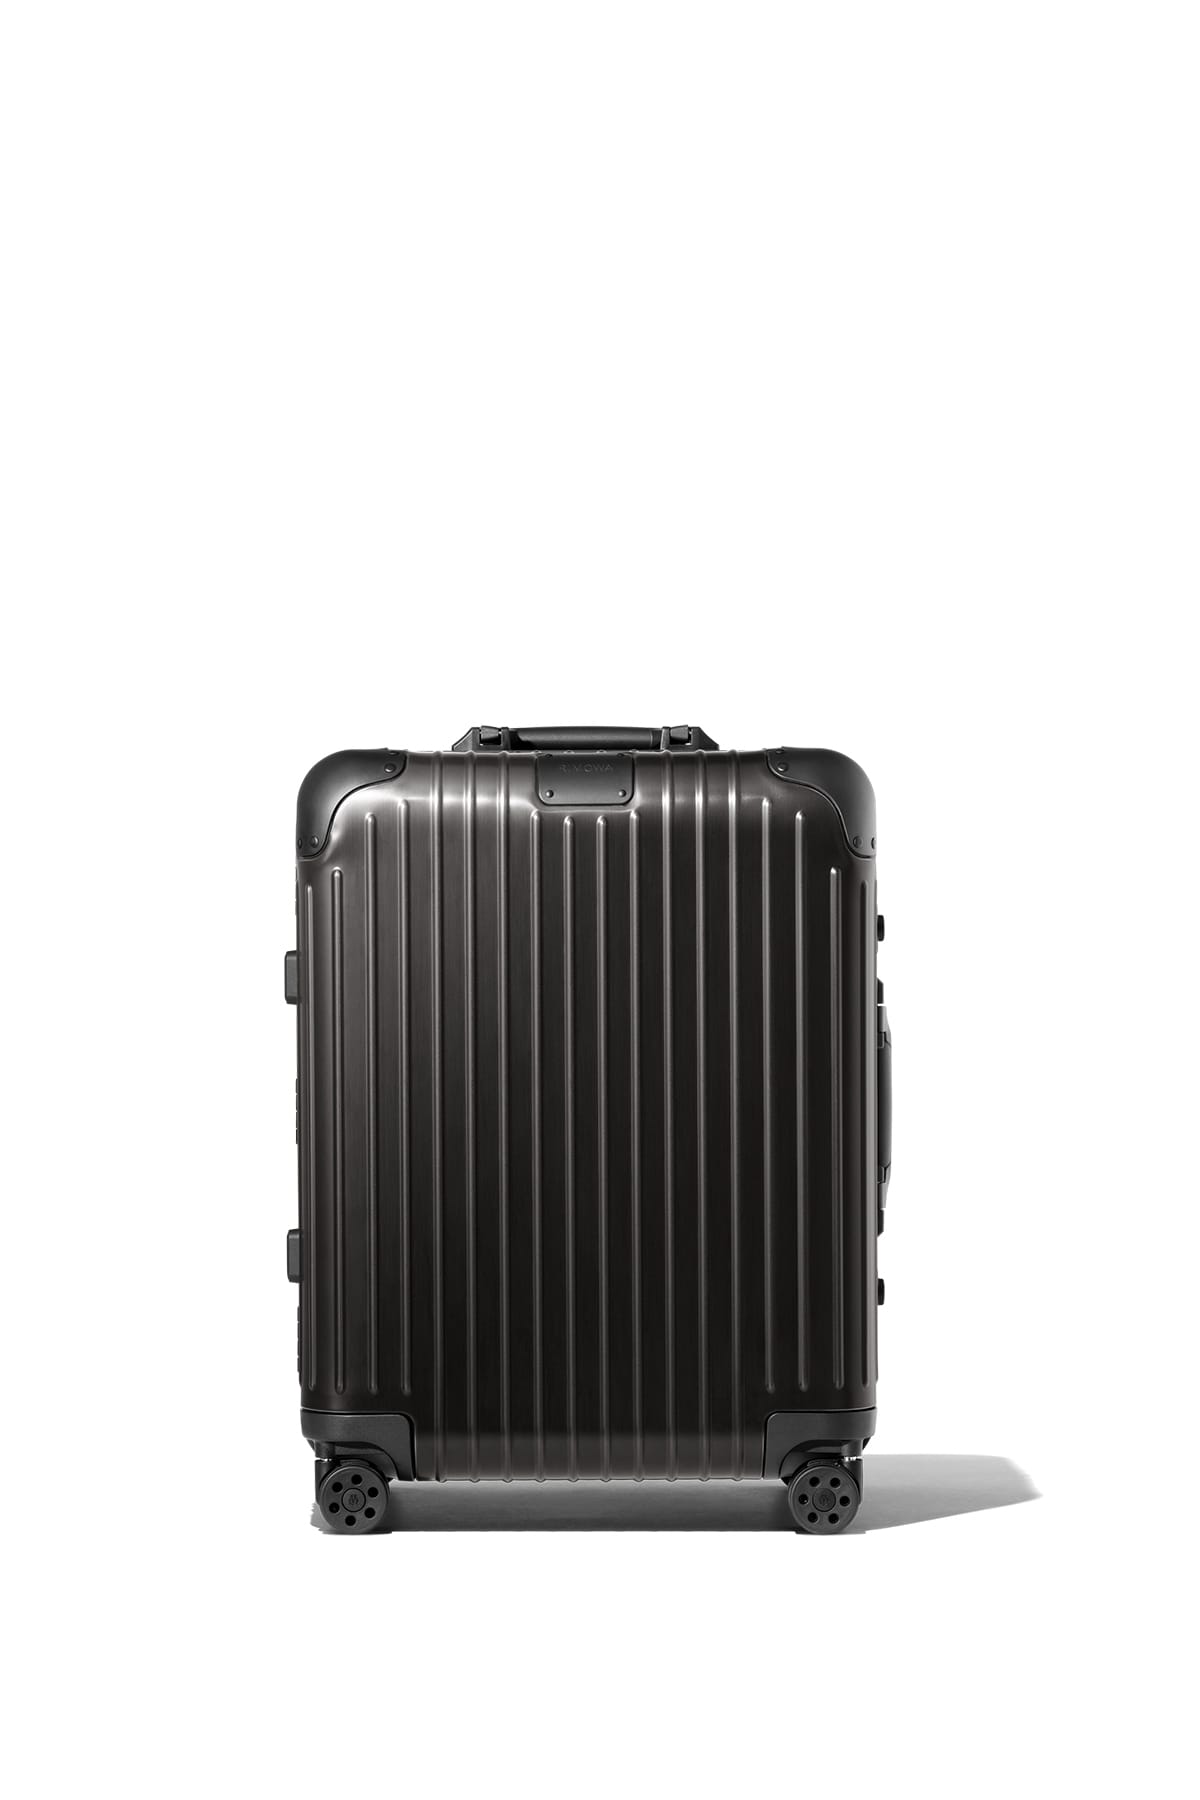 rimowa luggage logo